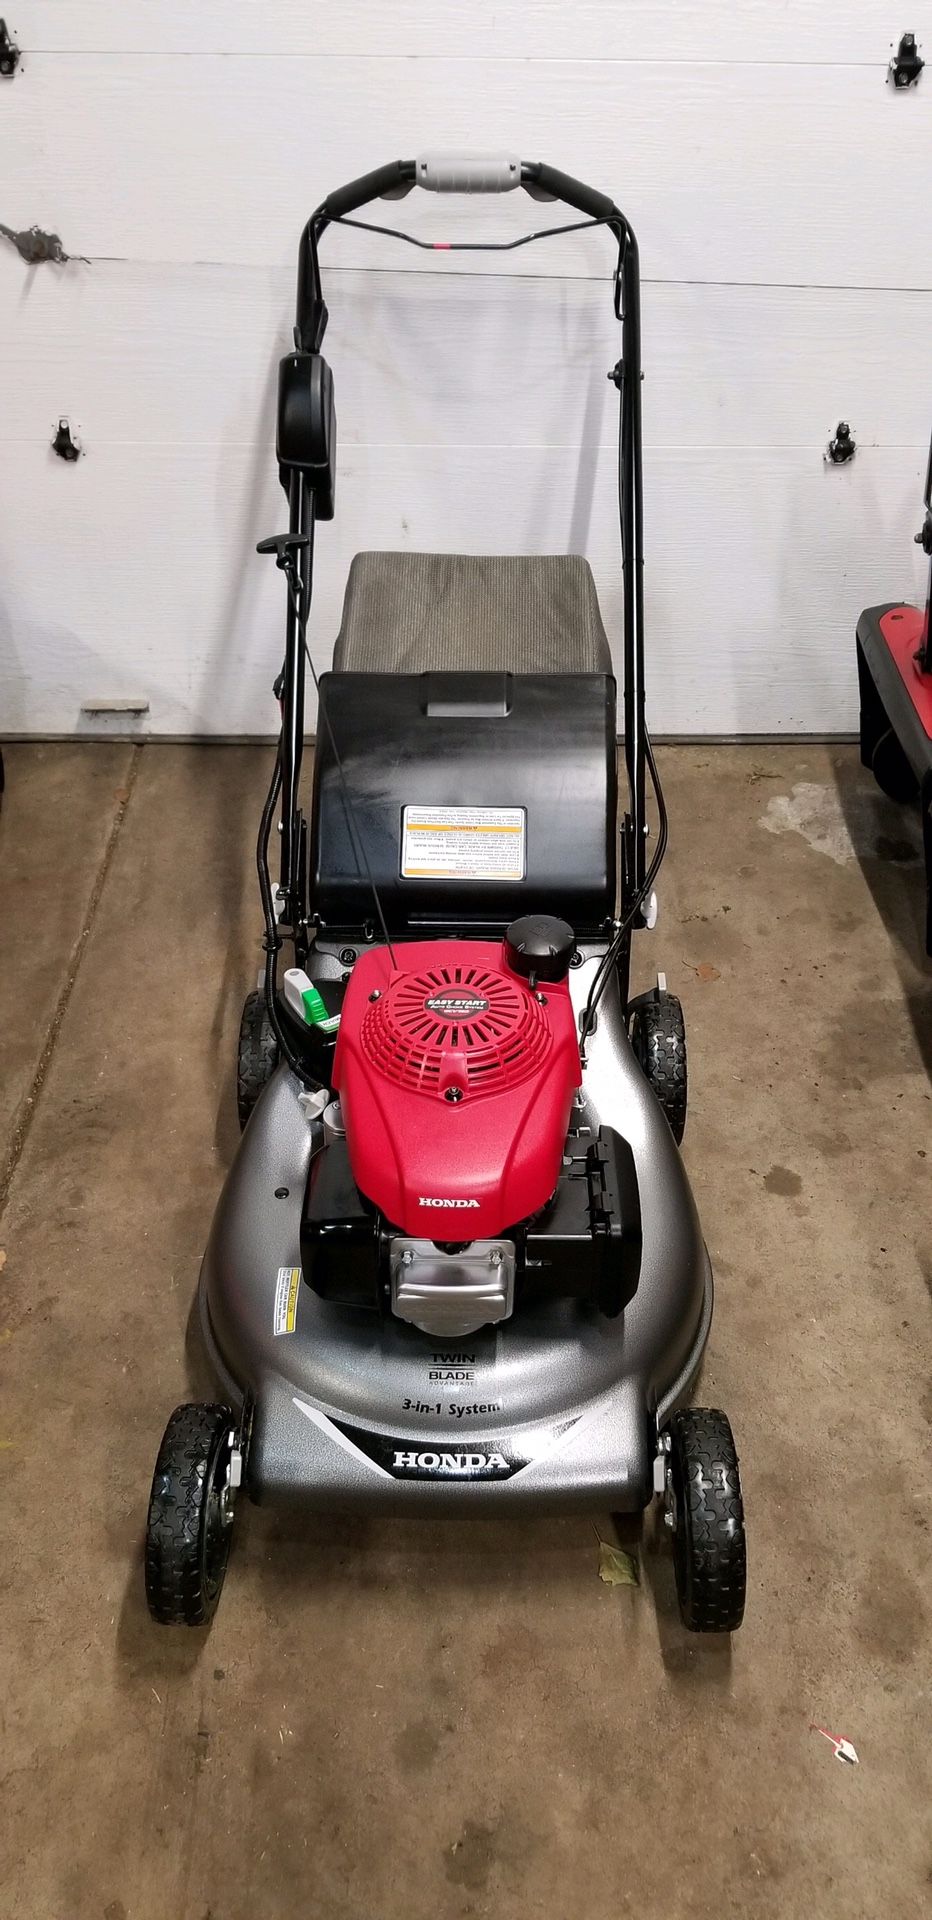 2019 Honda HRR216VLA. Used for 30 days. Lawnmower KEY START Warranty. Retail $499+Tax